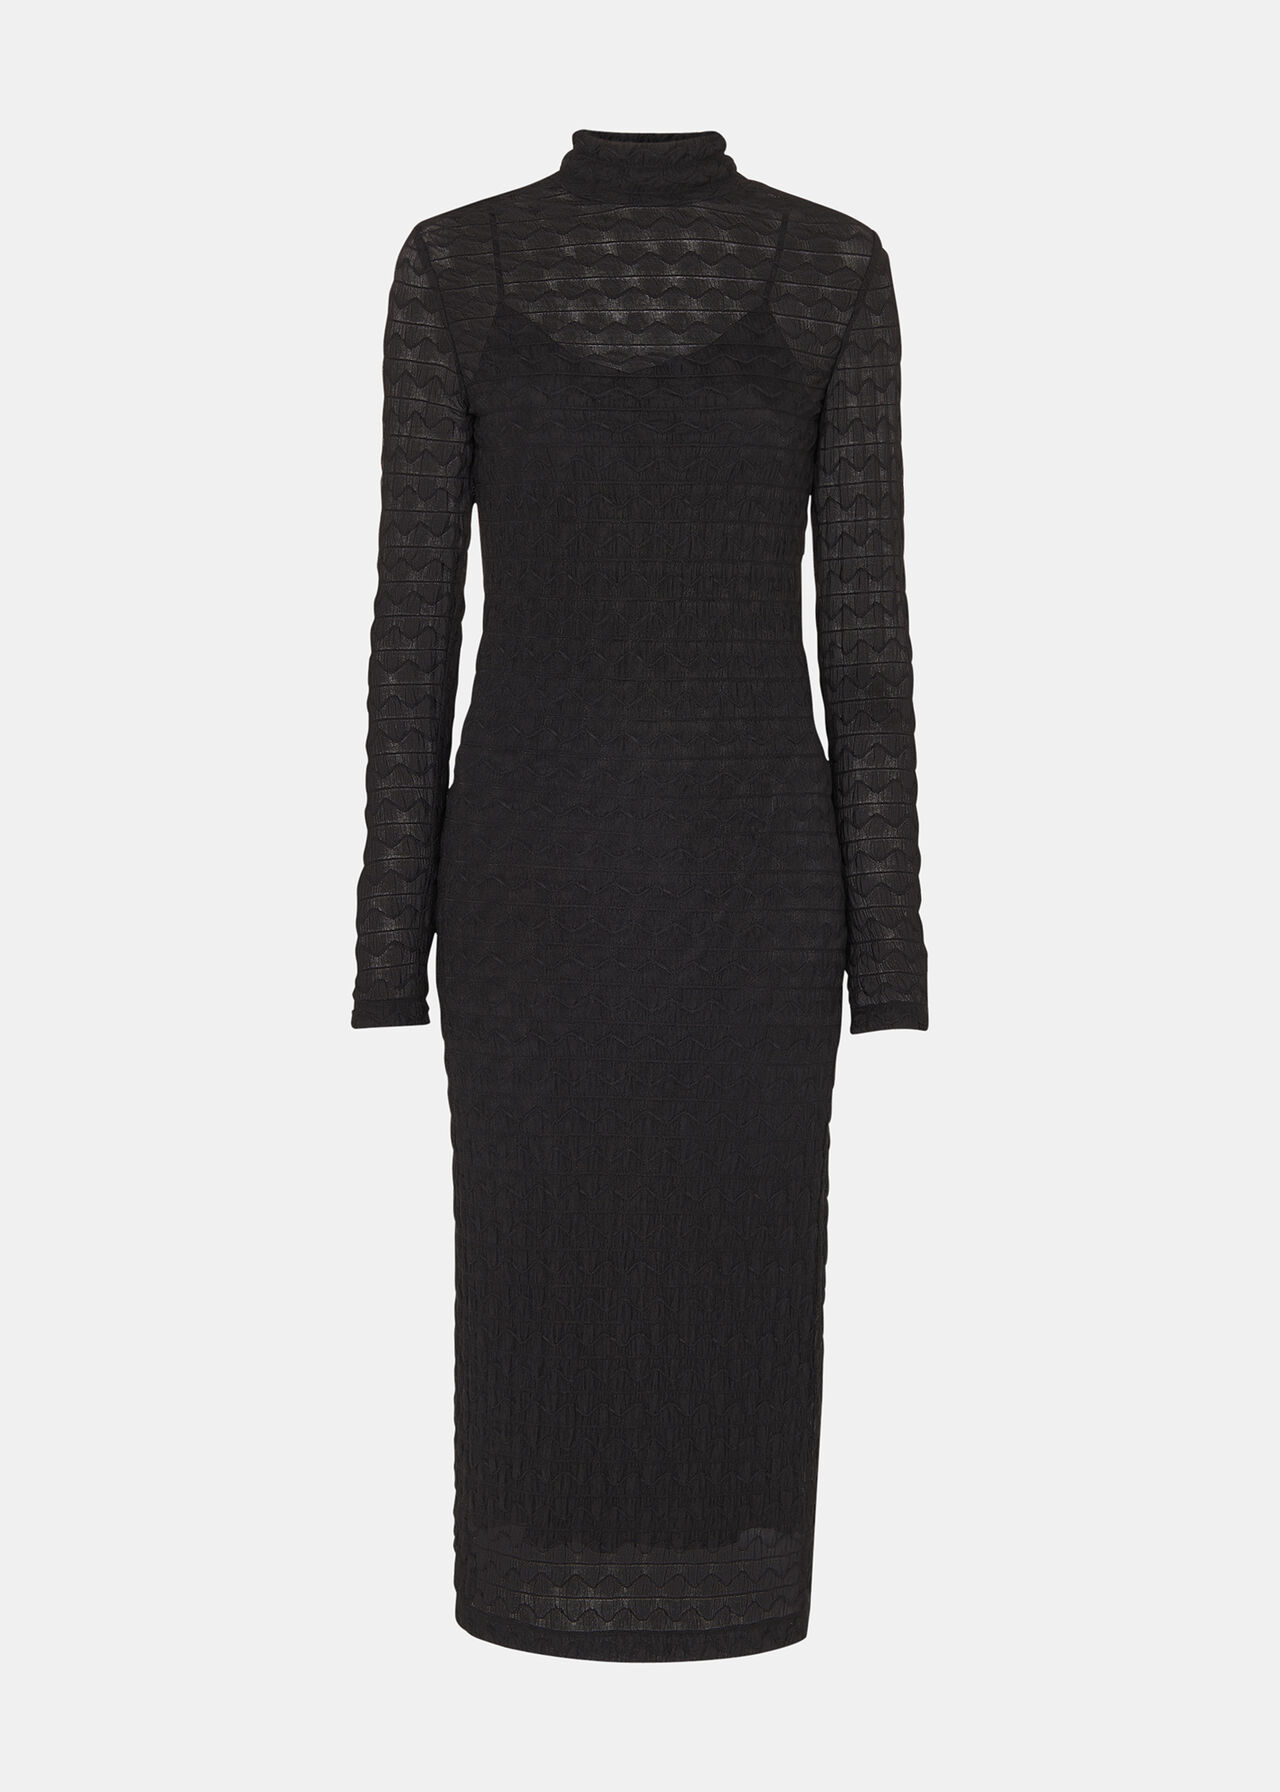 Black Textured Long Sleeve Dress | WHISTLES